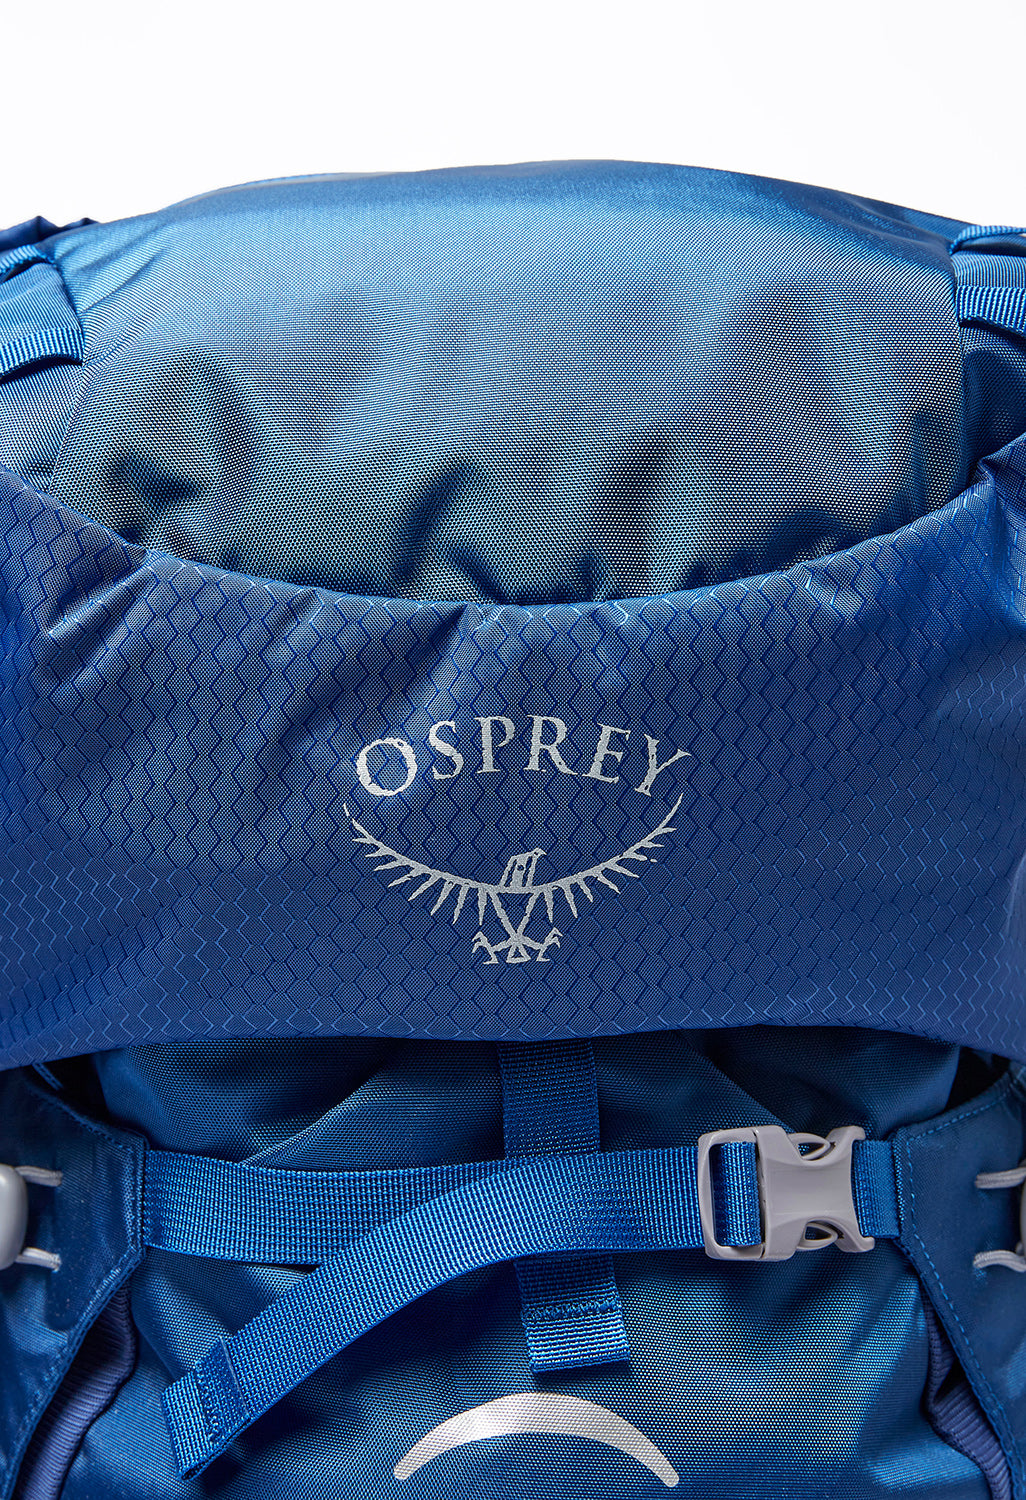 Osprey Ariel 65 Women's Backpack - Ceramic Blue